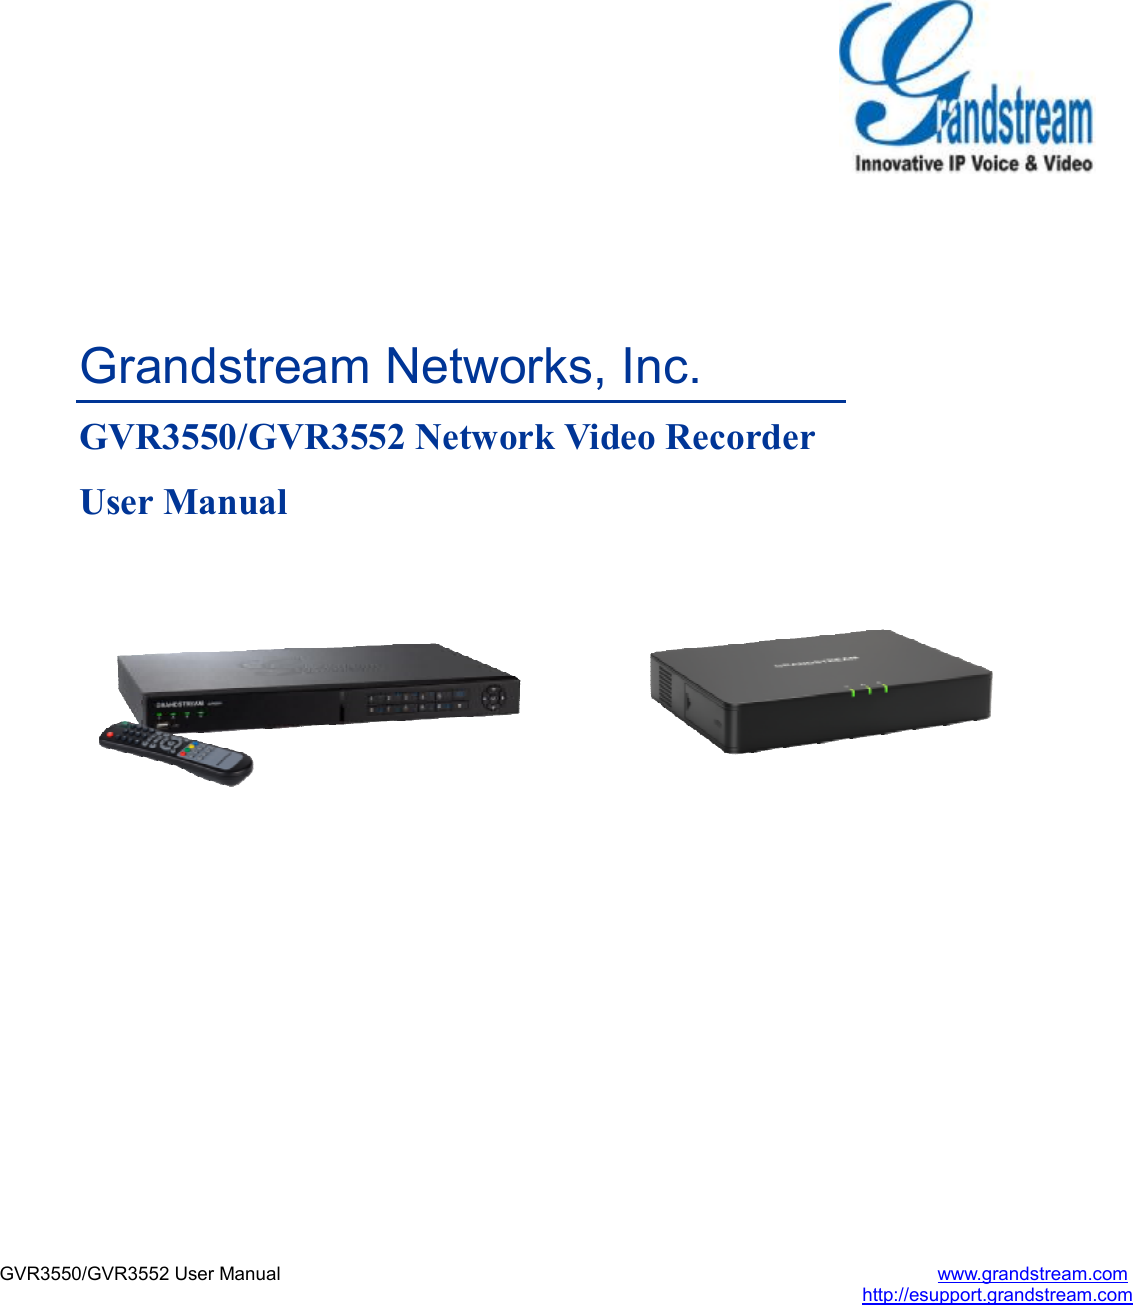       GVR3550/GVR3552 User Manual                                                                      www.grandstream.com                                                                                                   http://esupport.grandstream.com   Grandstream Networks, Inc. GVR3550/GVR3552 Network Video Recorder User Manual  